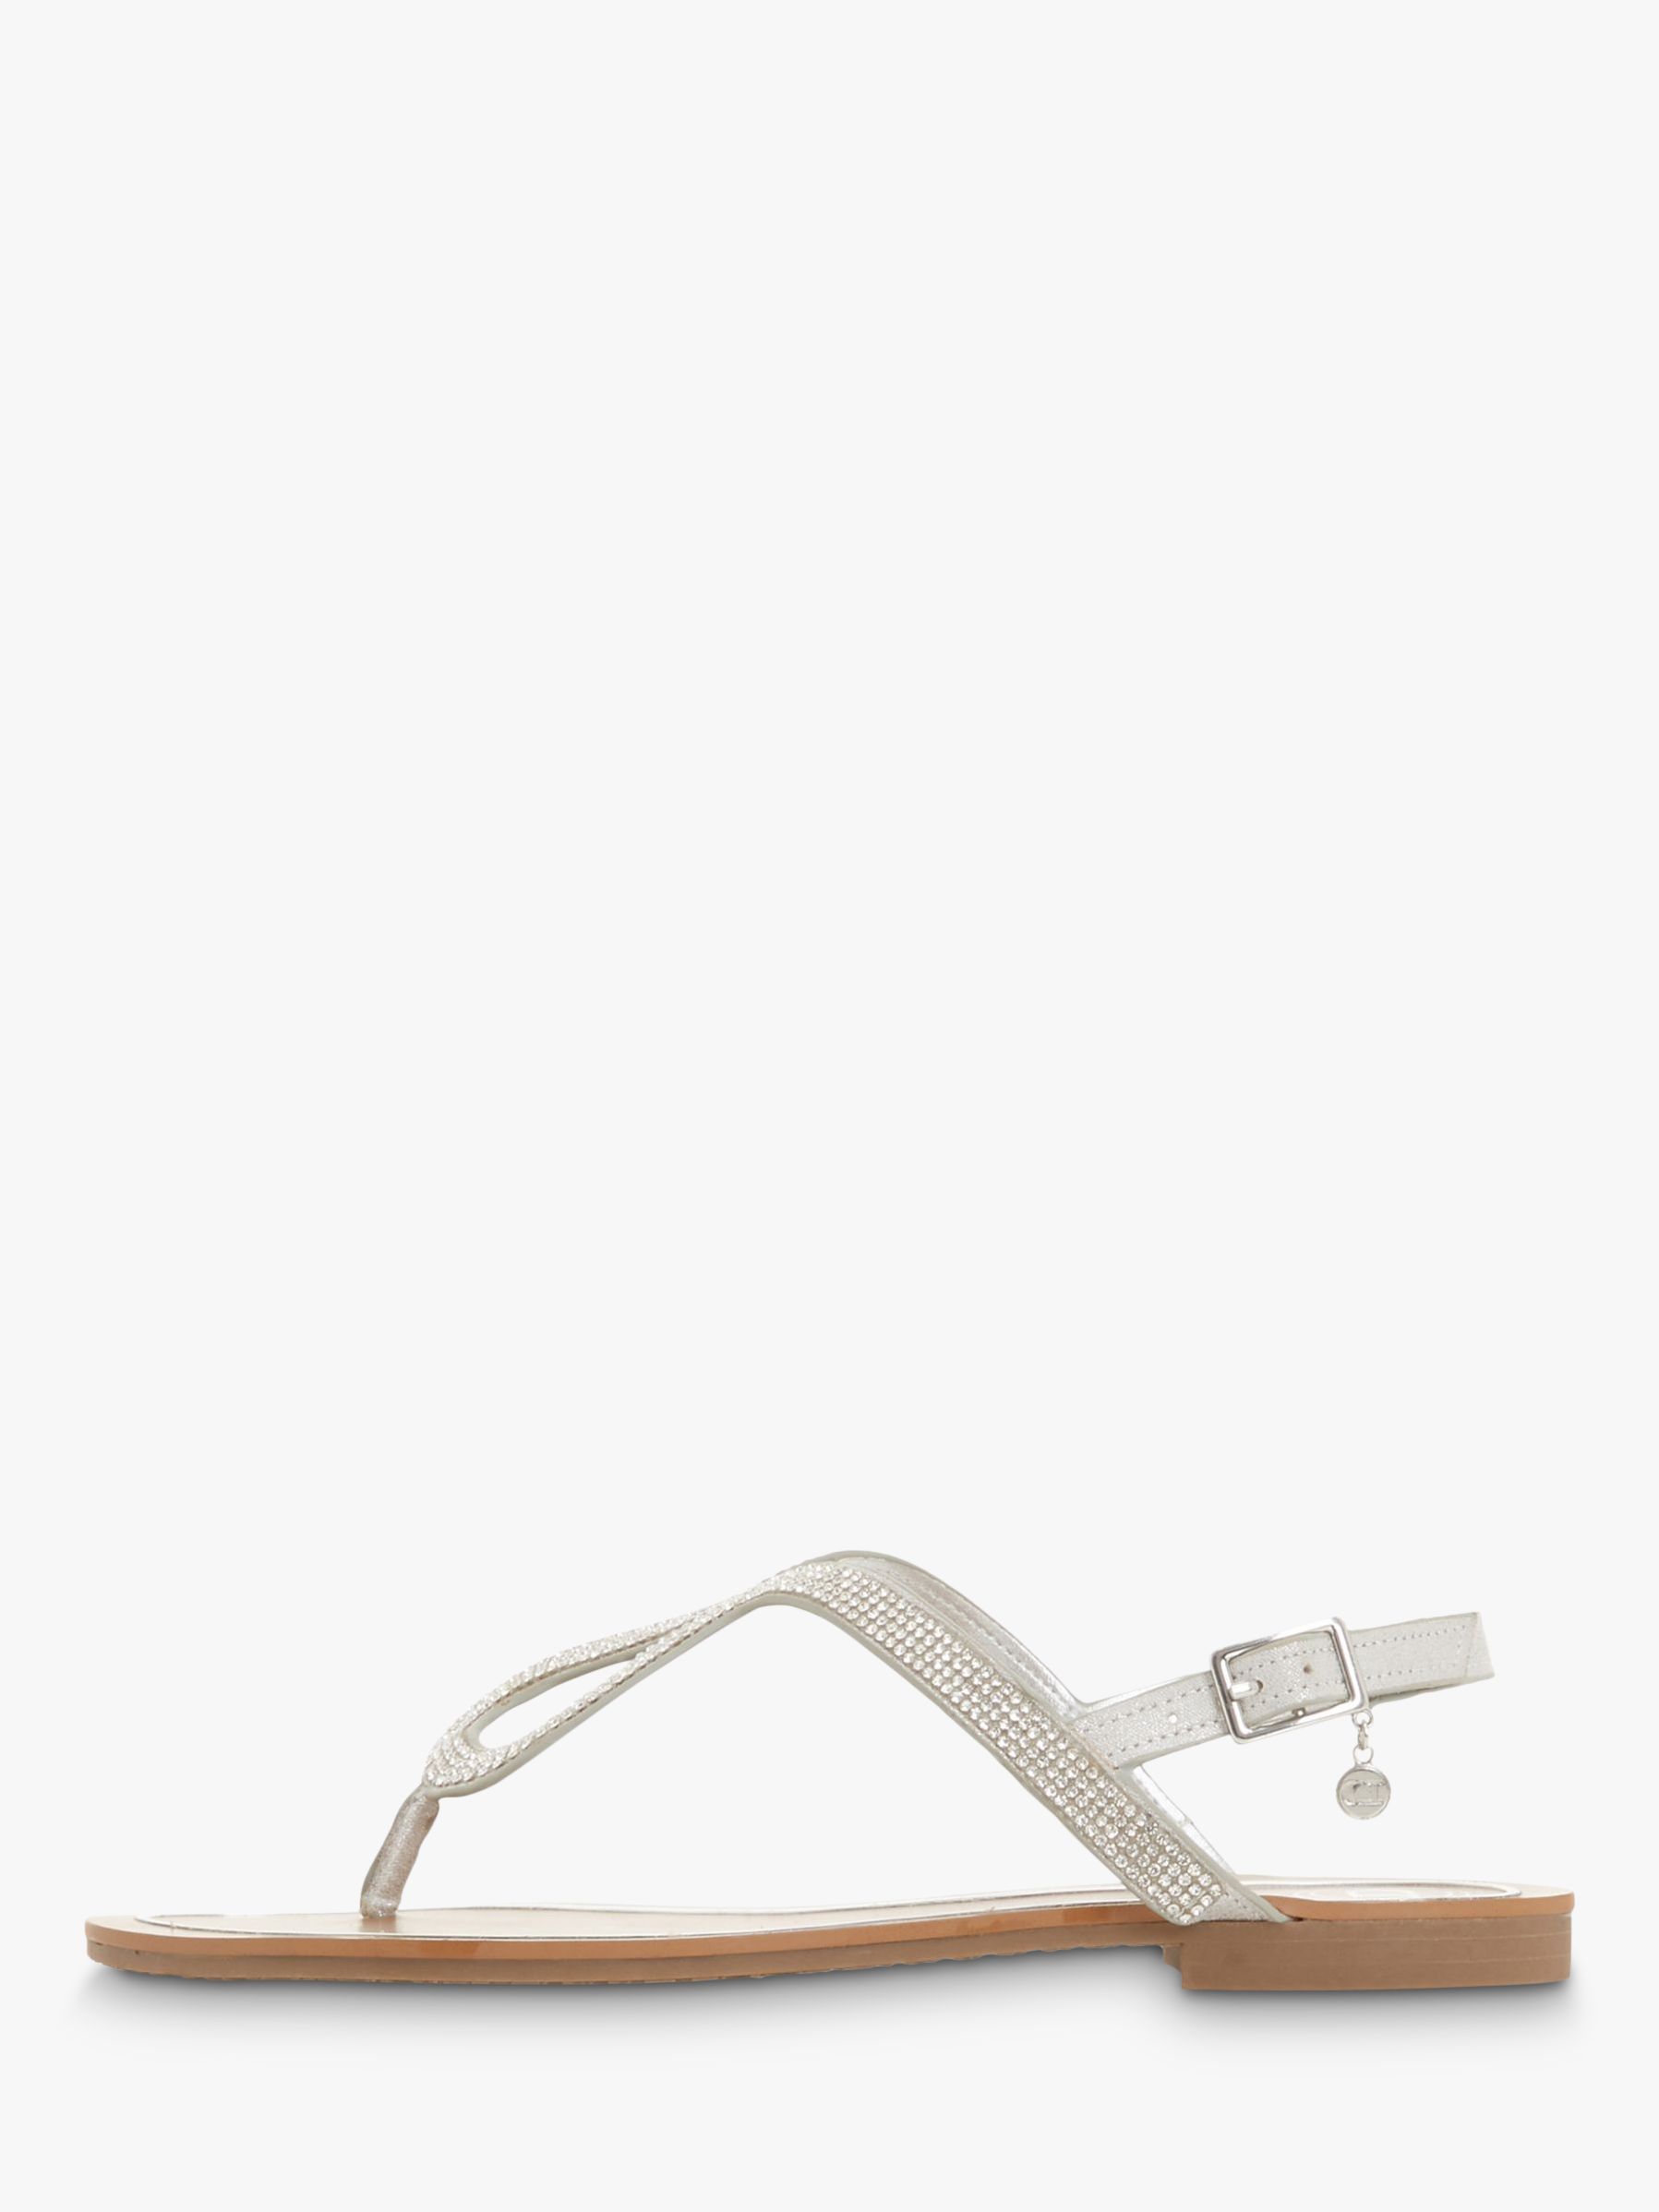 dune silver flat sandals